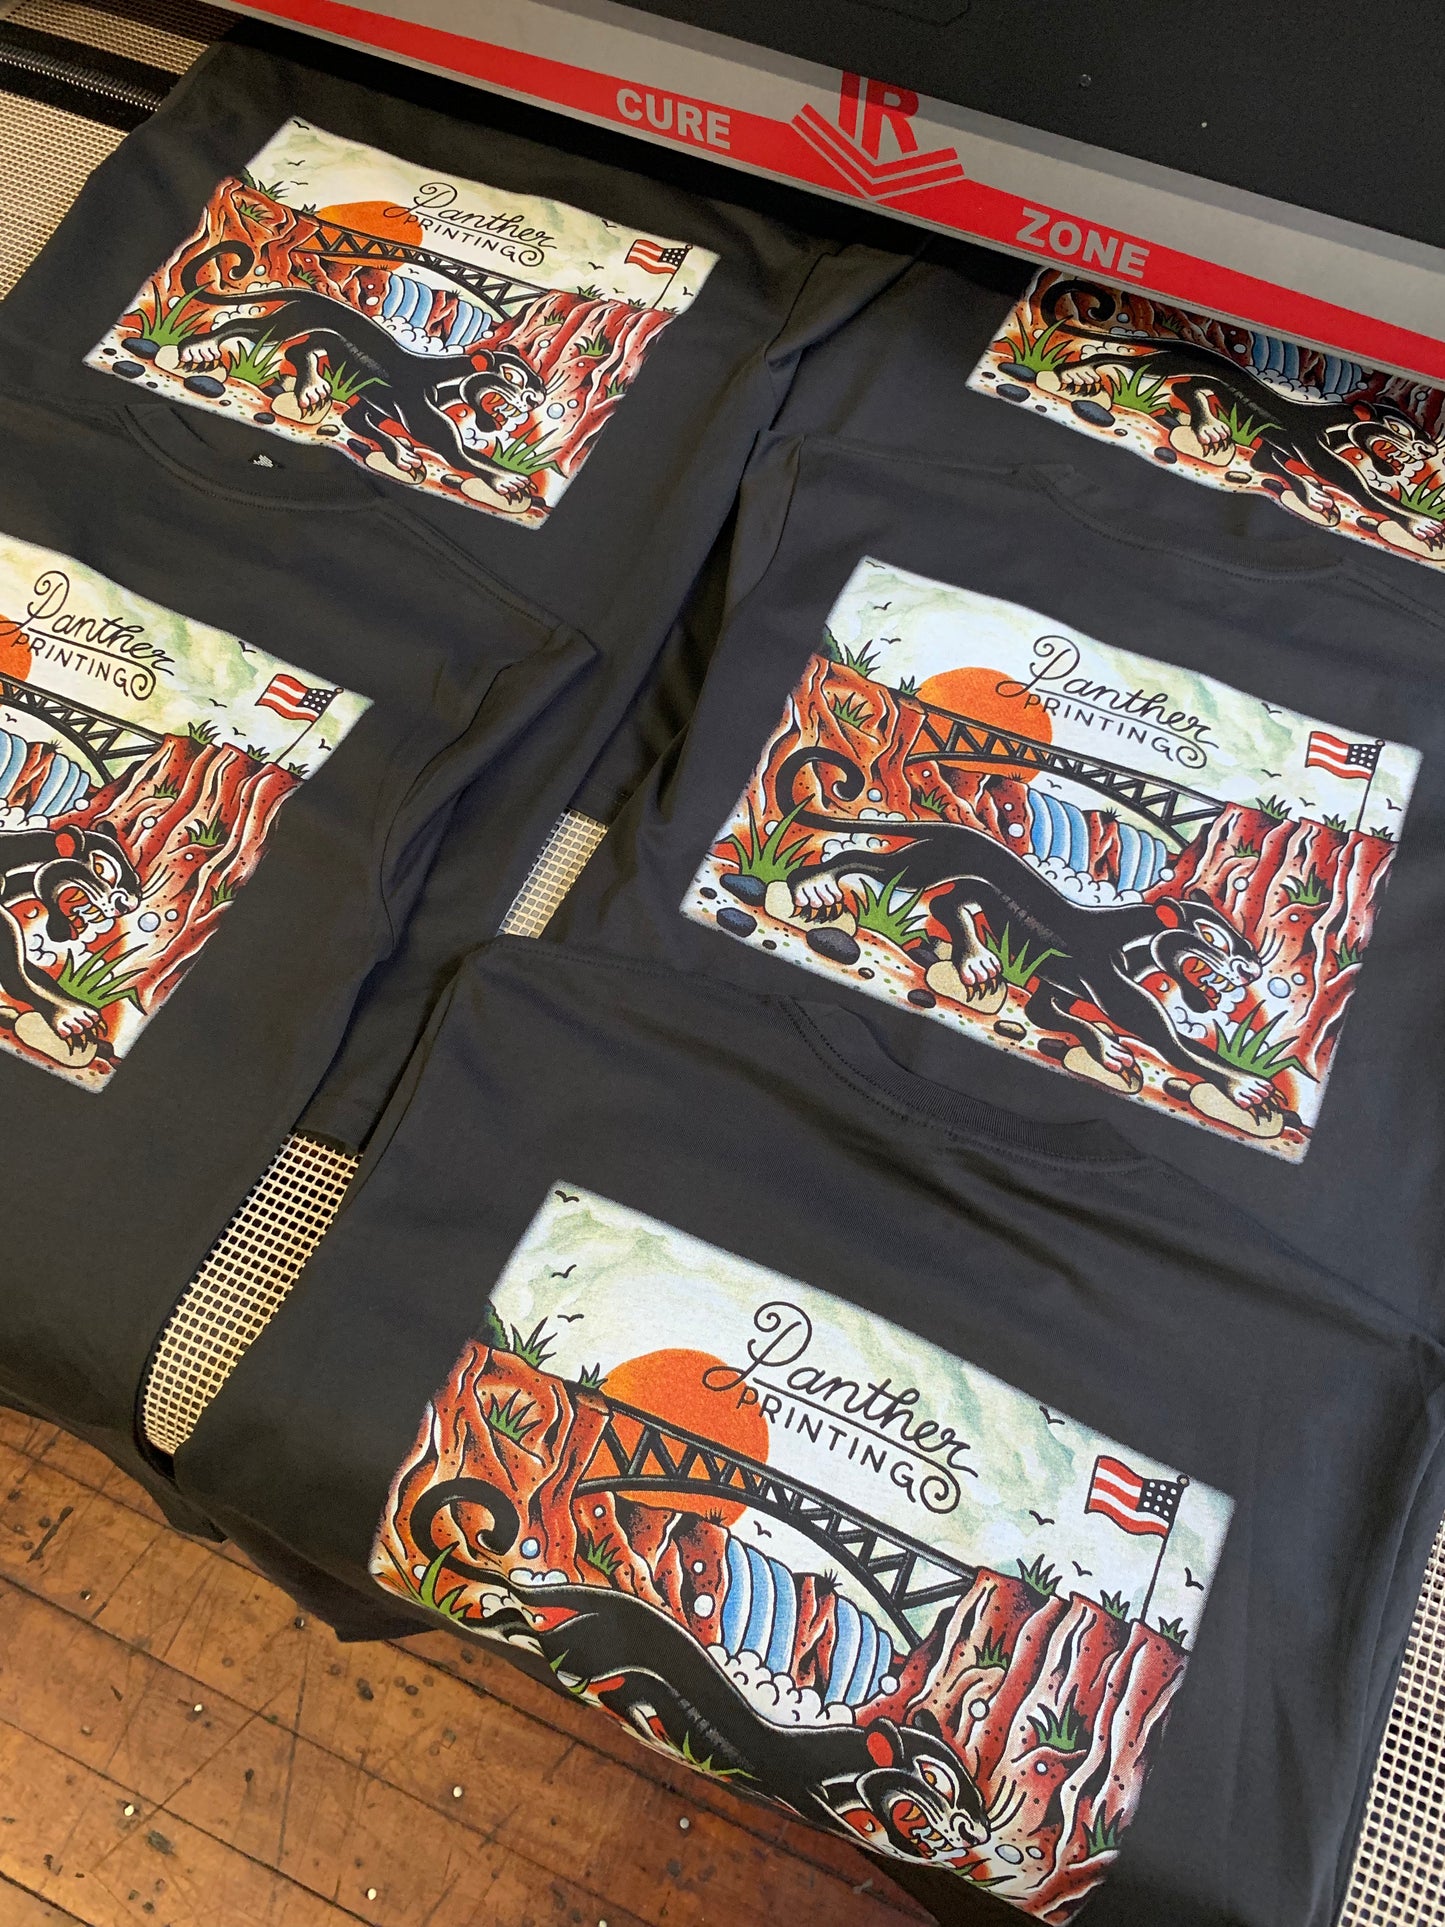 Panther Printing "Great Falls" T-Shirt